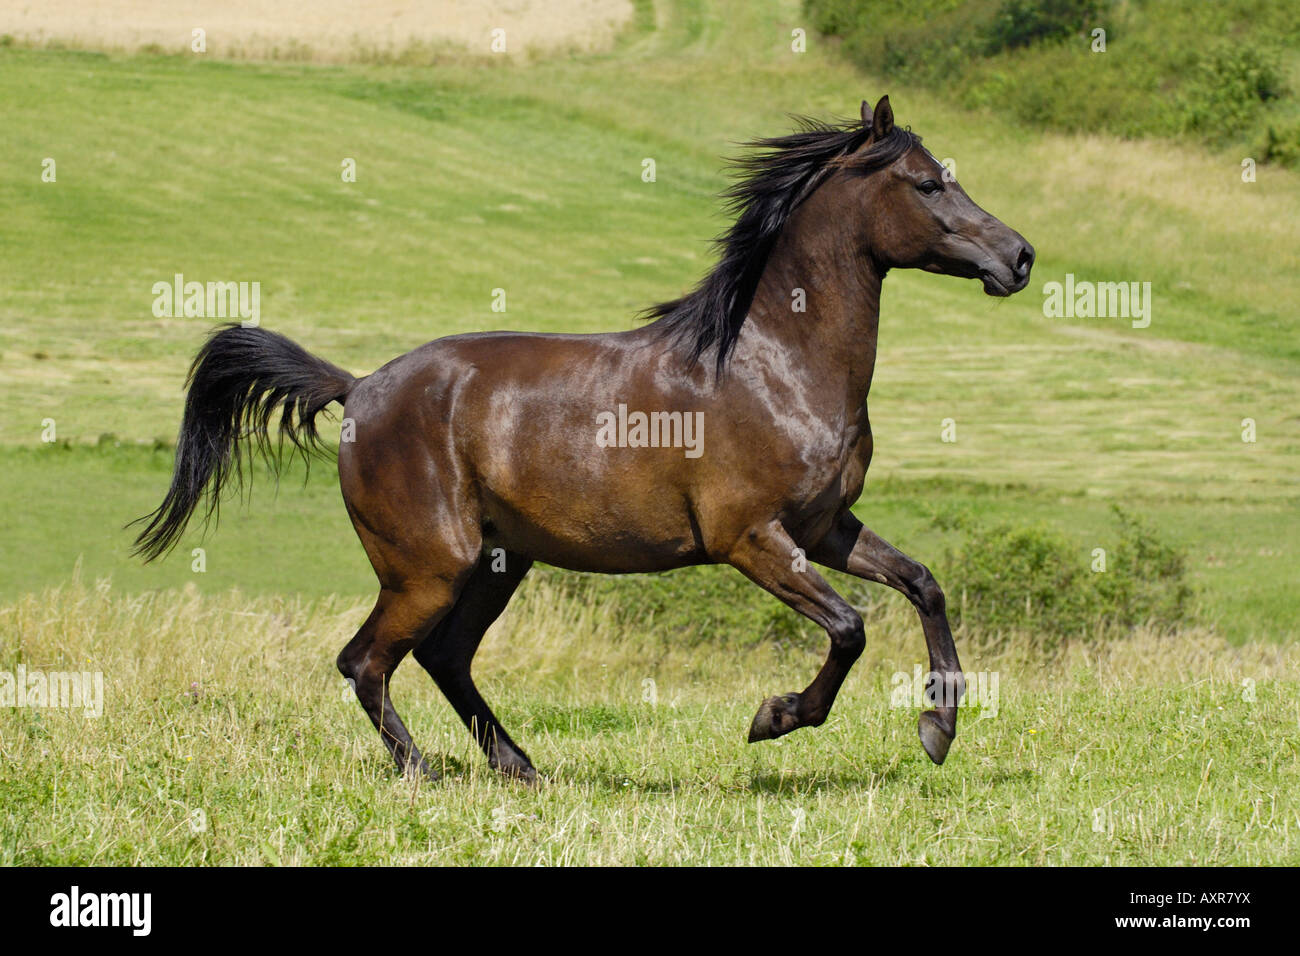 Arabian horse galloping in the paddock Stock Photo